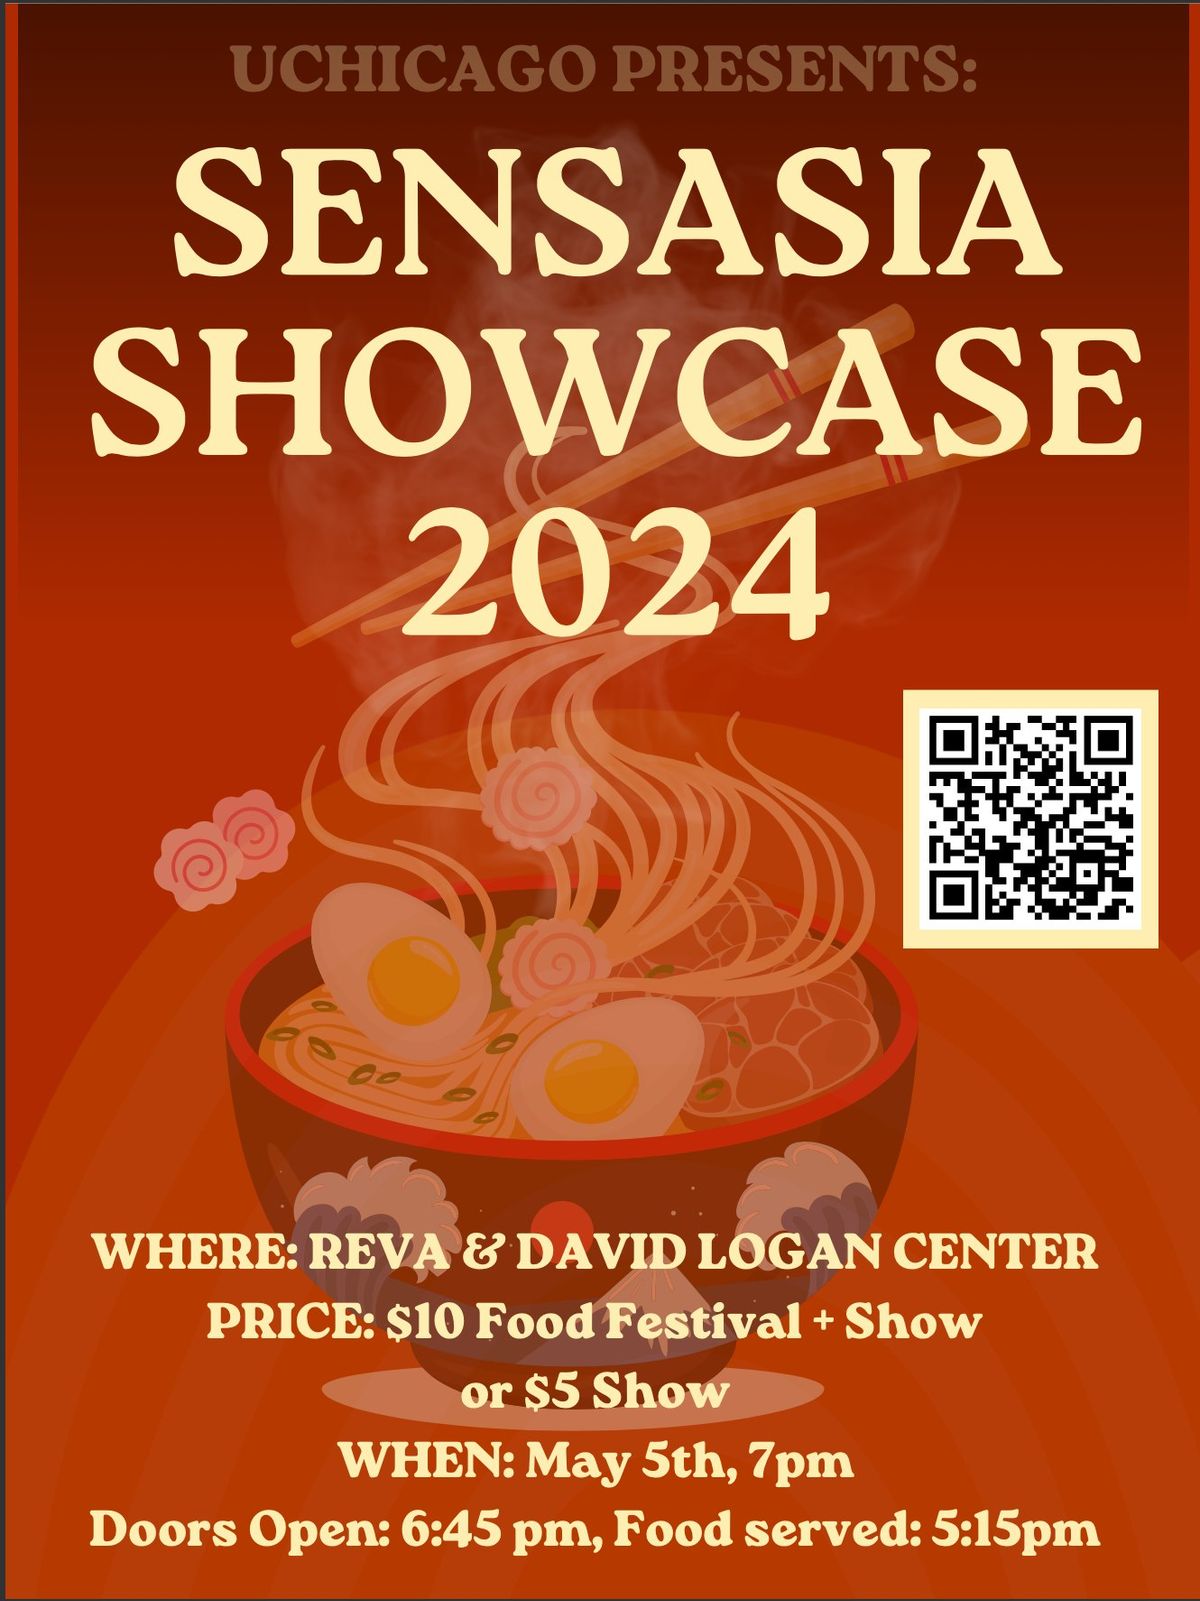 SENSASIA 2024 SHOWCASE + FOOD FESTIVAL